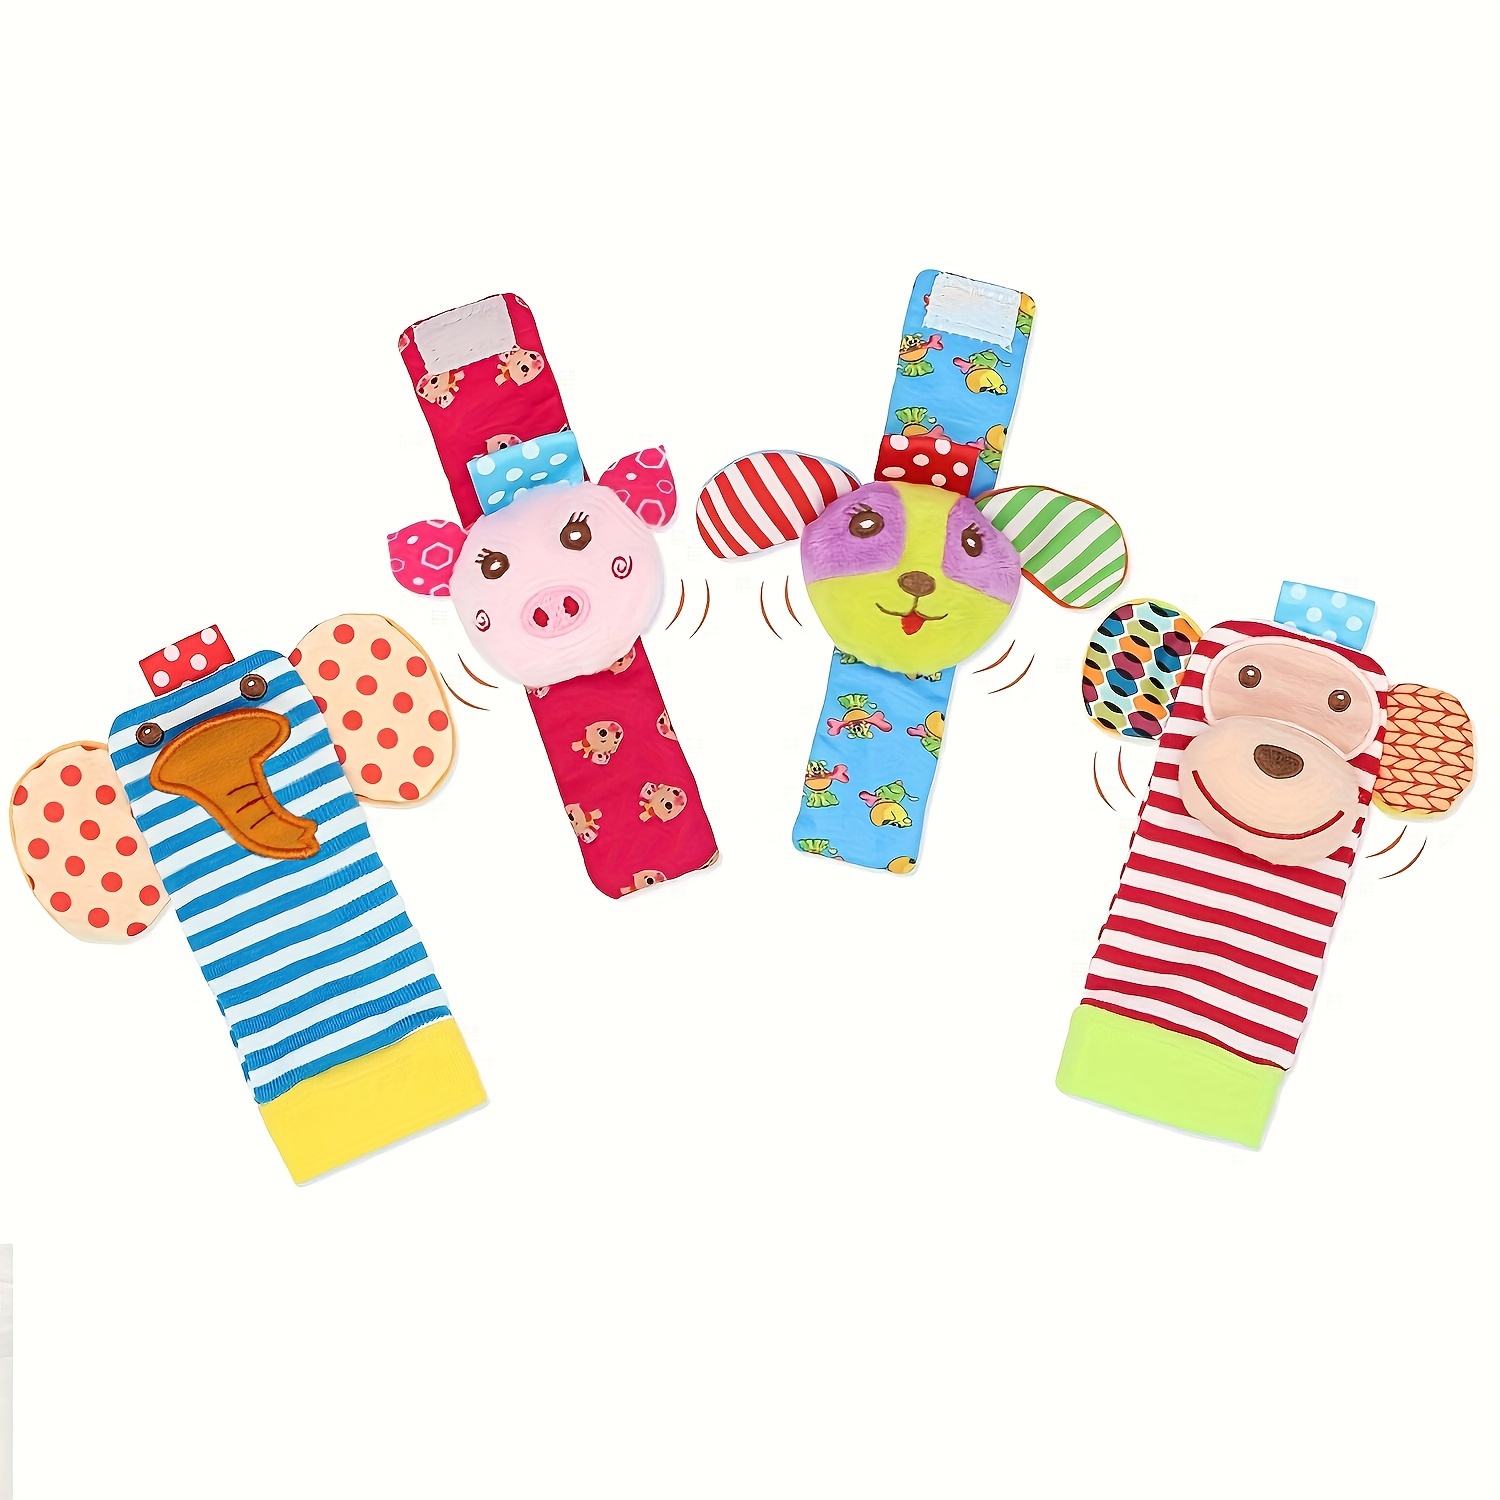 4pcs Baby Wrist Rattles Sock Toys Newborn Foot Finder and Wrist